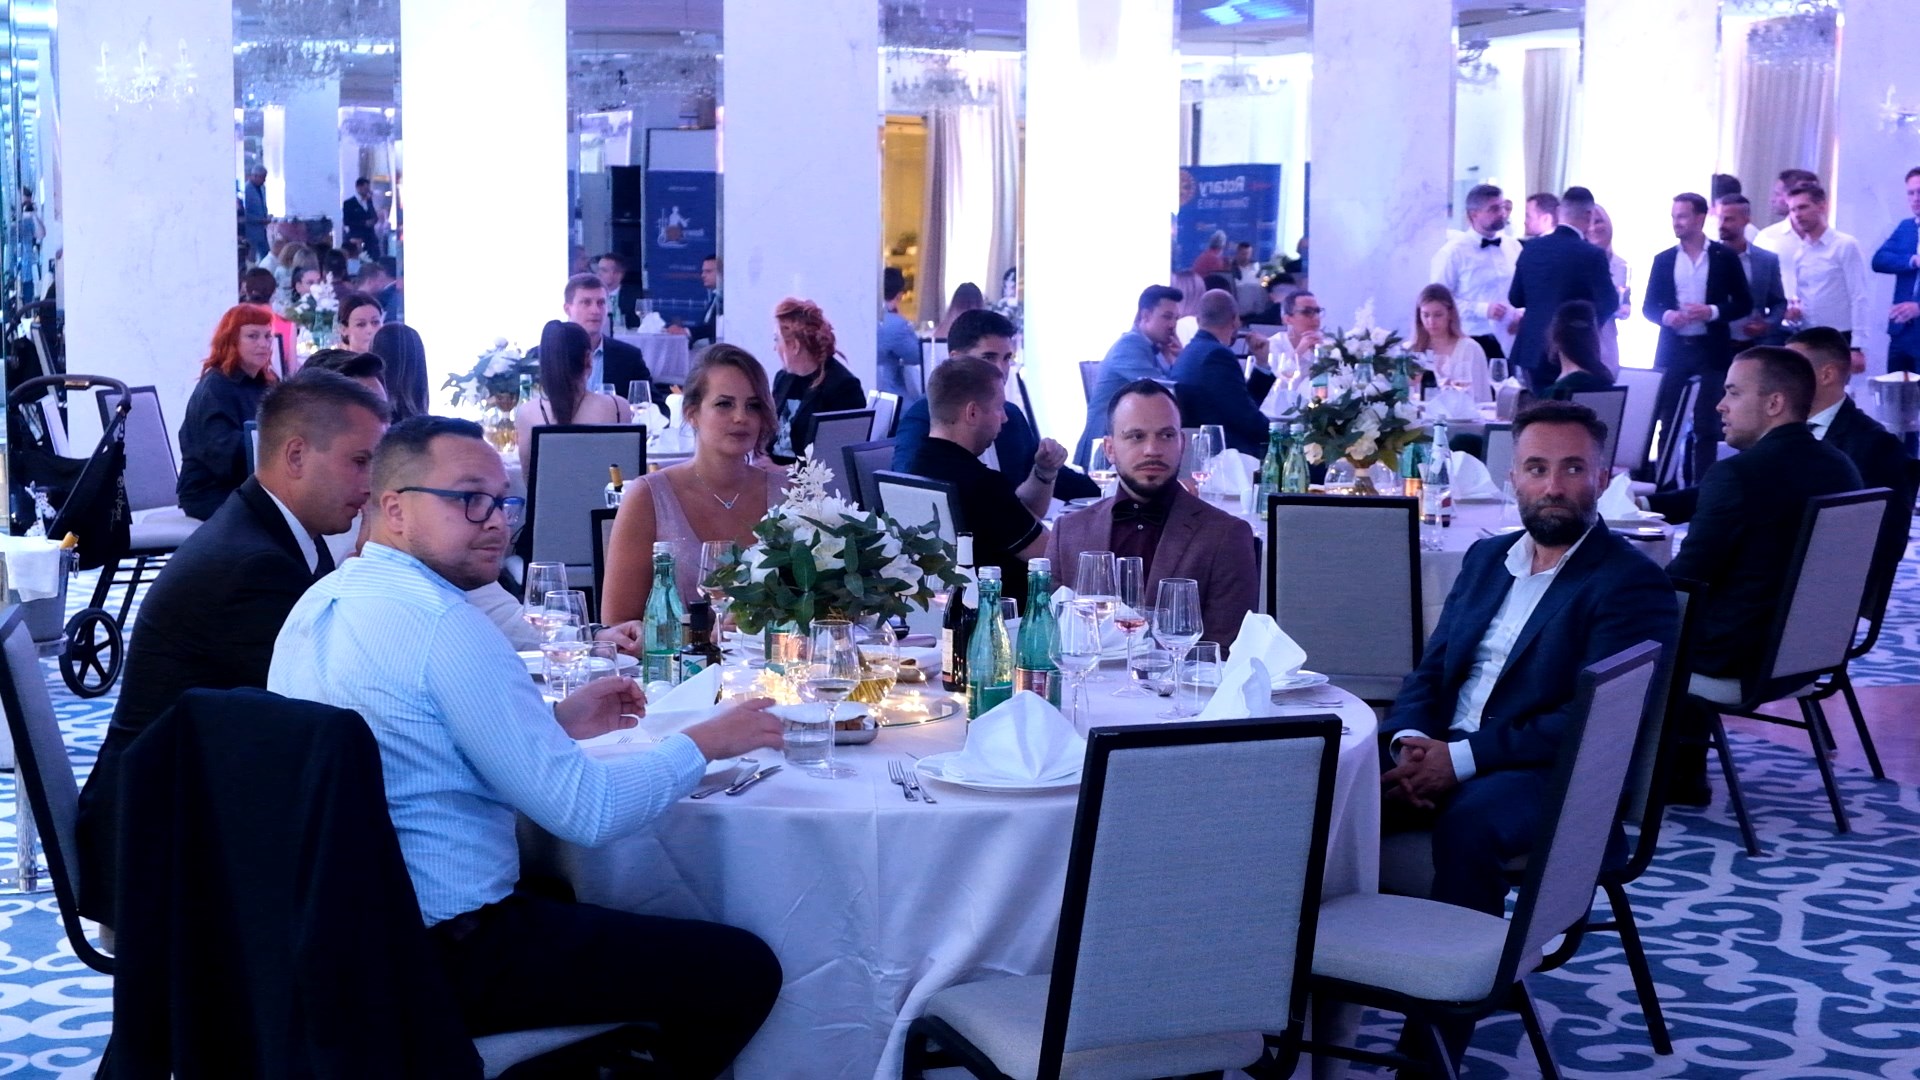 U raskošnoj dvorani Hotela Royal održana Gala charter večera Rotary kluba Opatija Lungo mare